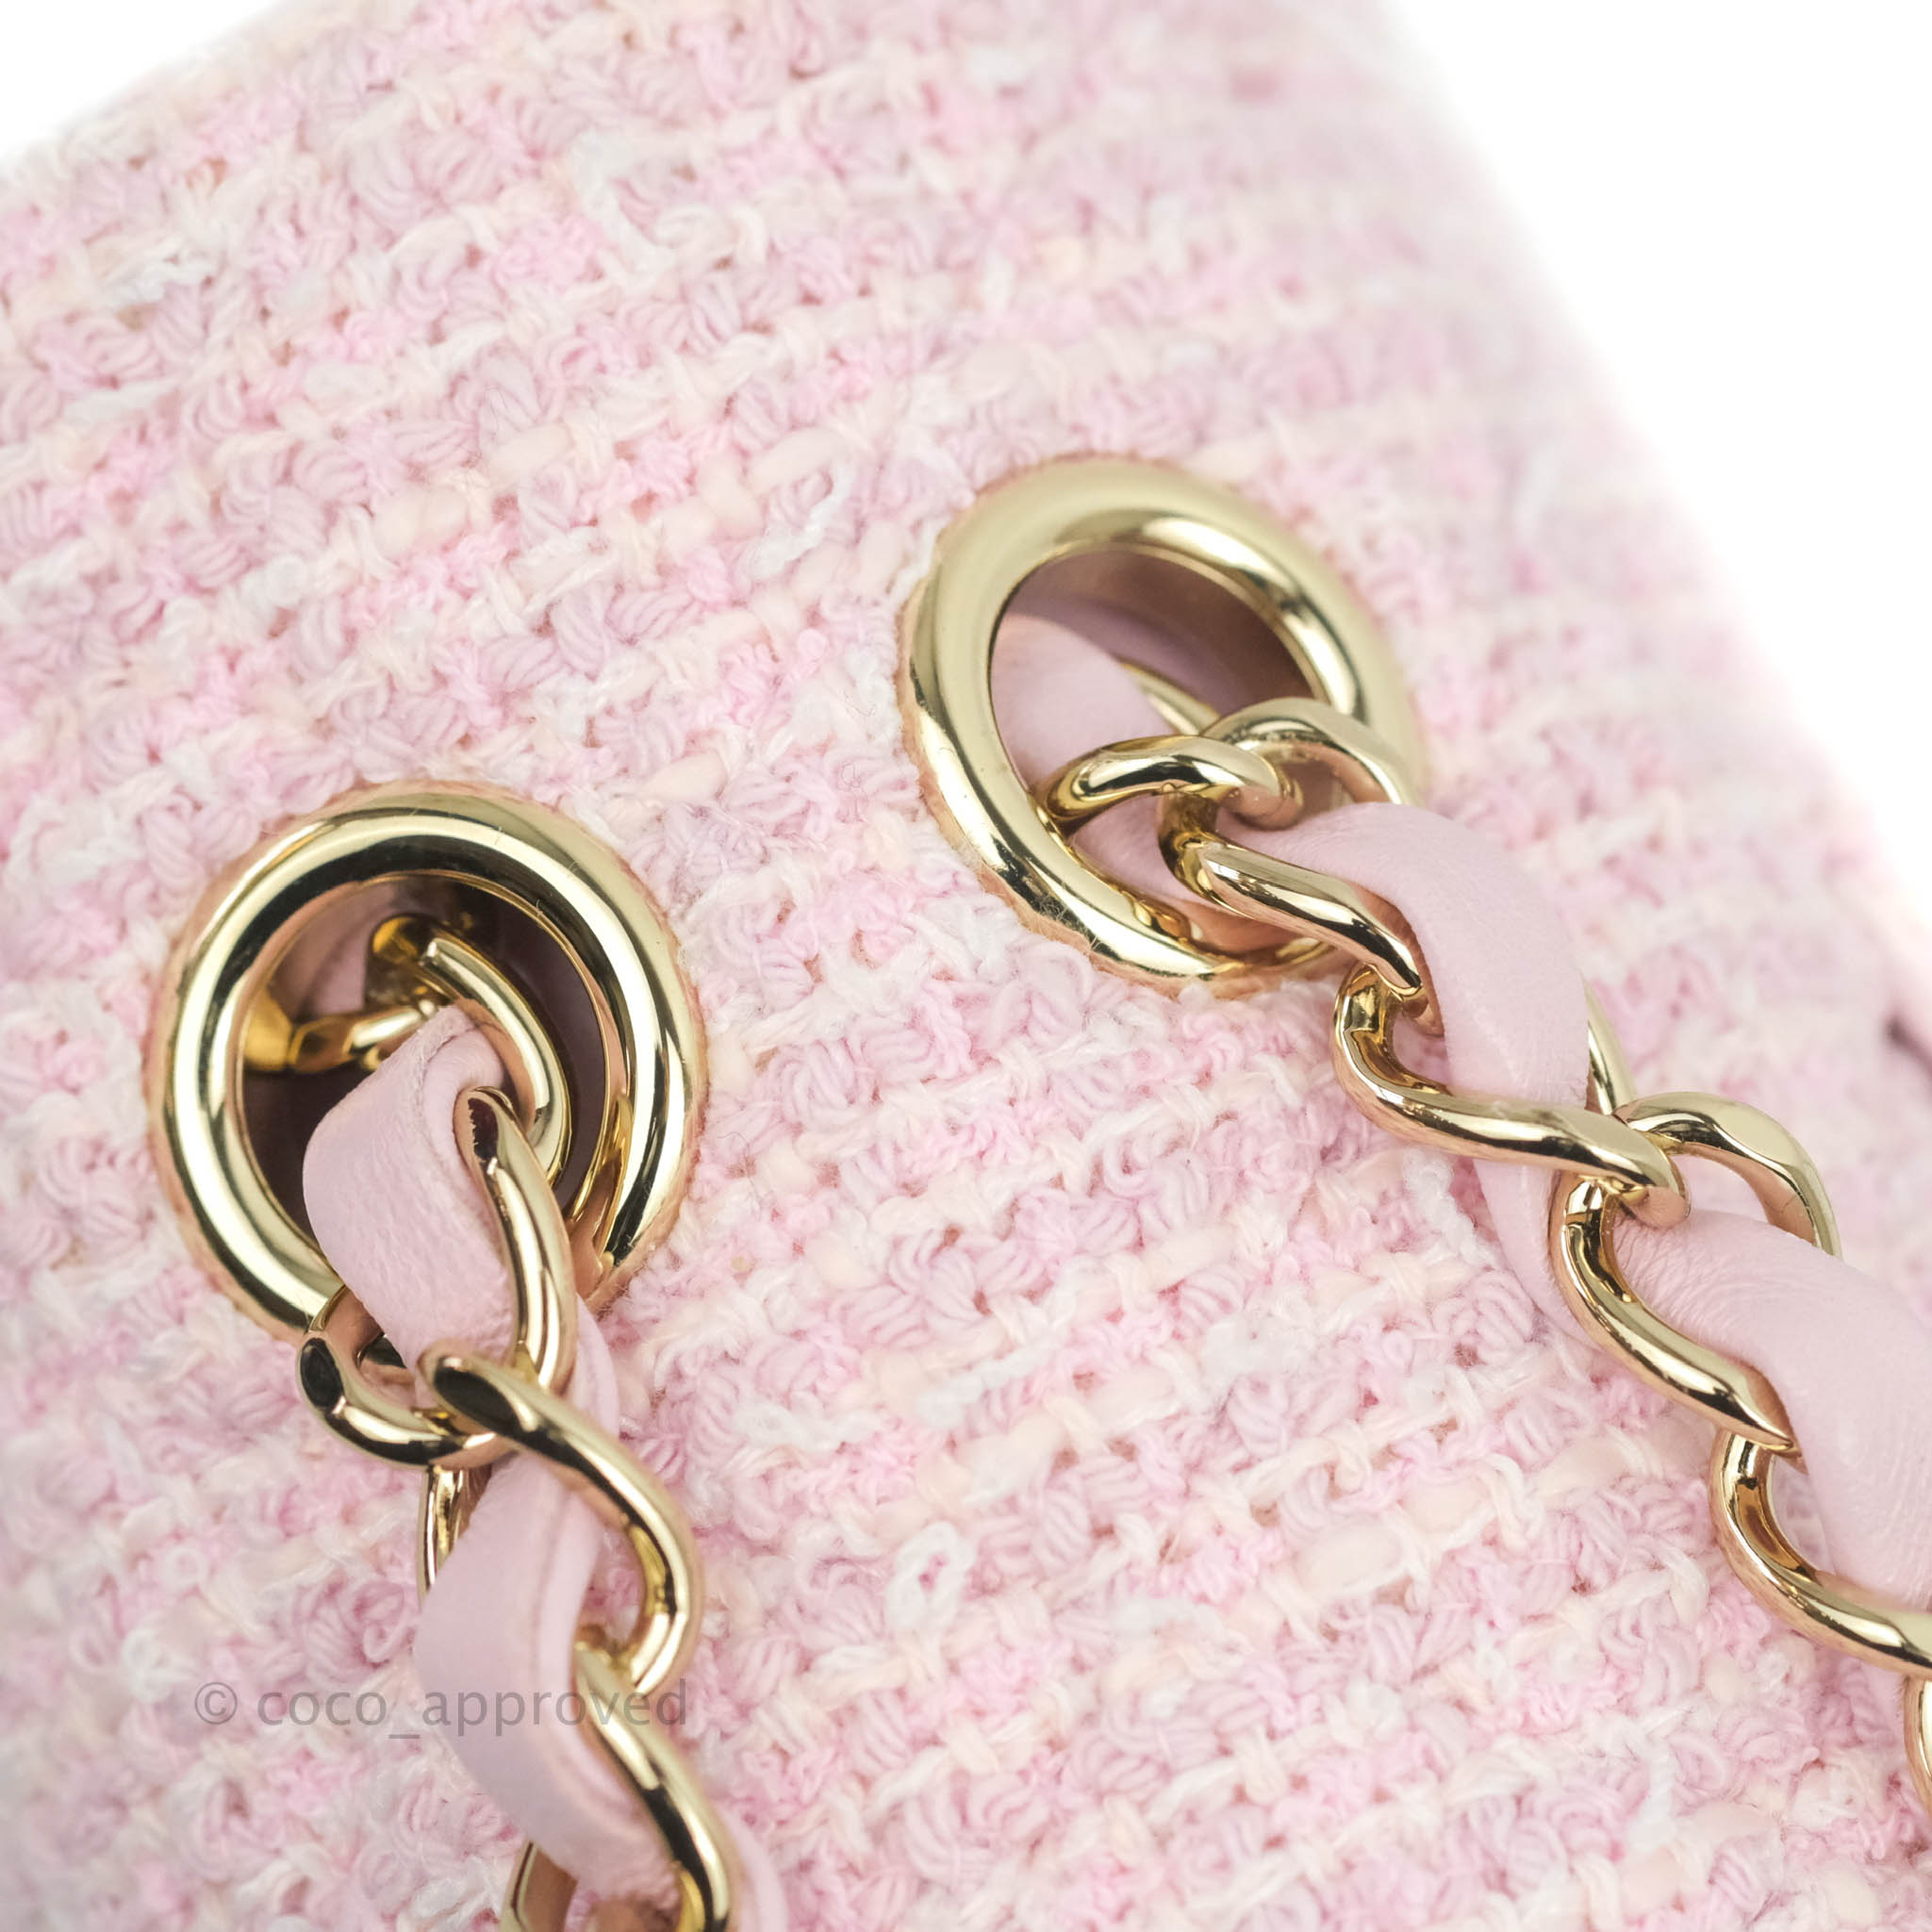 Chanel Pink Tweed Medium Classic Flap Bag GHW ASL3447